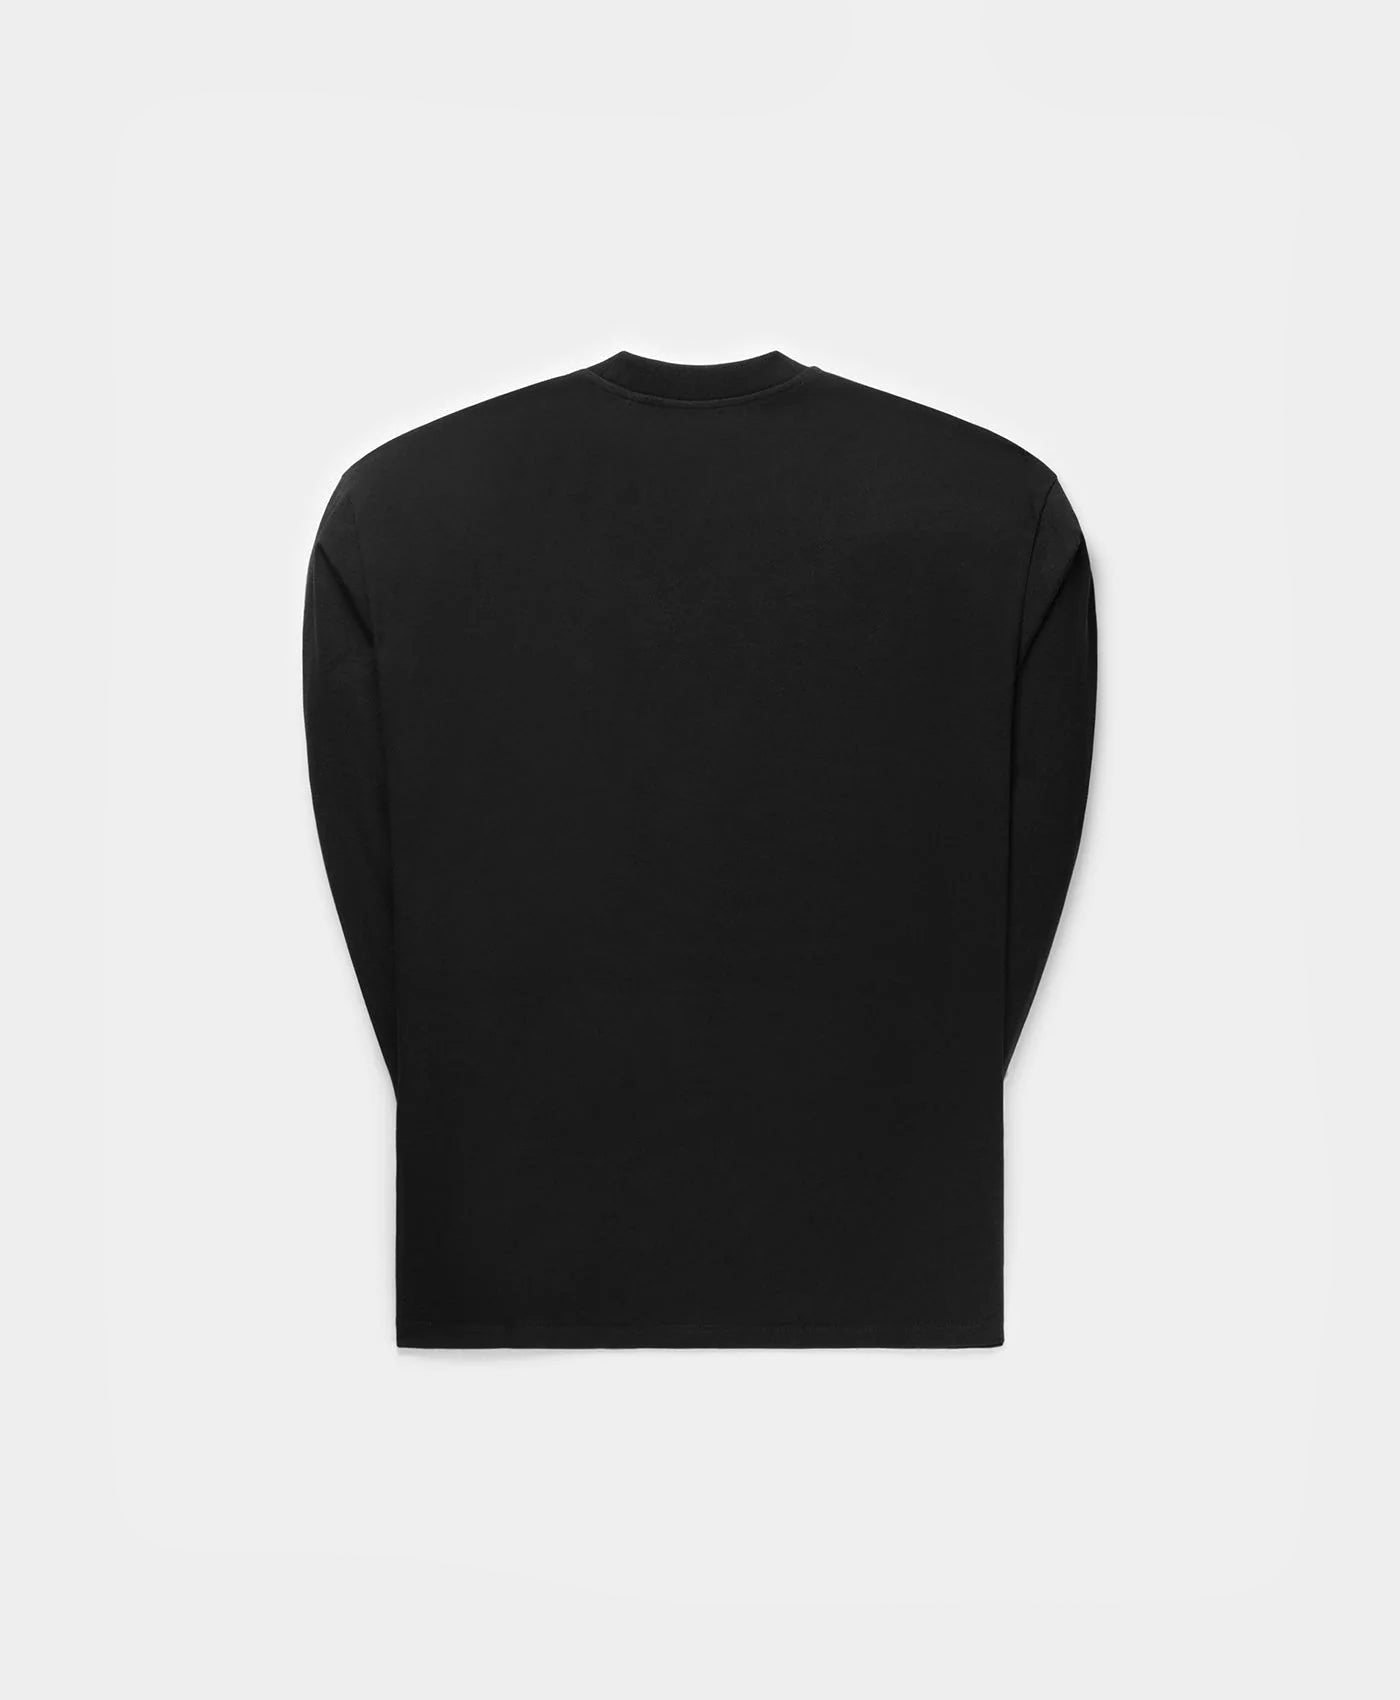 DP - Black Nirway LS T-Shirt - Packshot - Rear